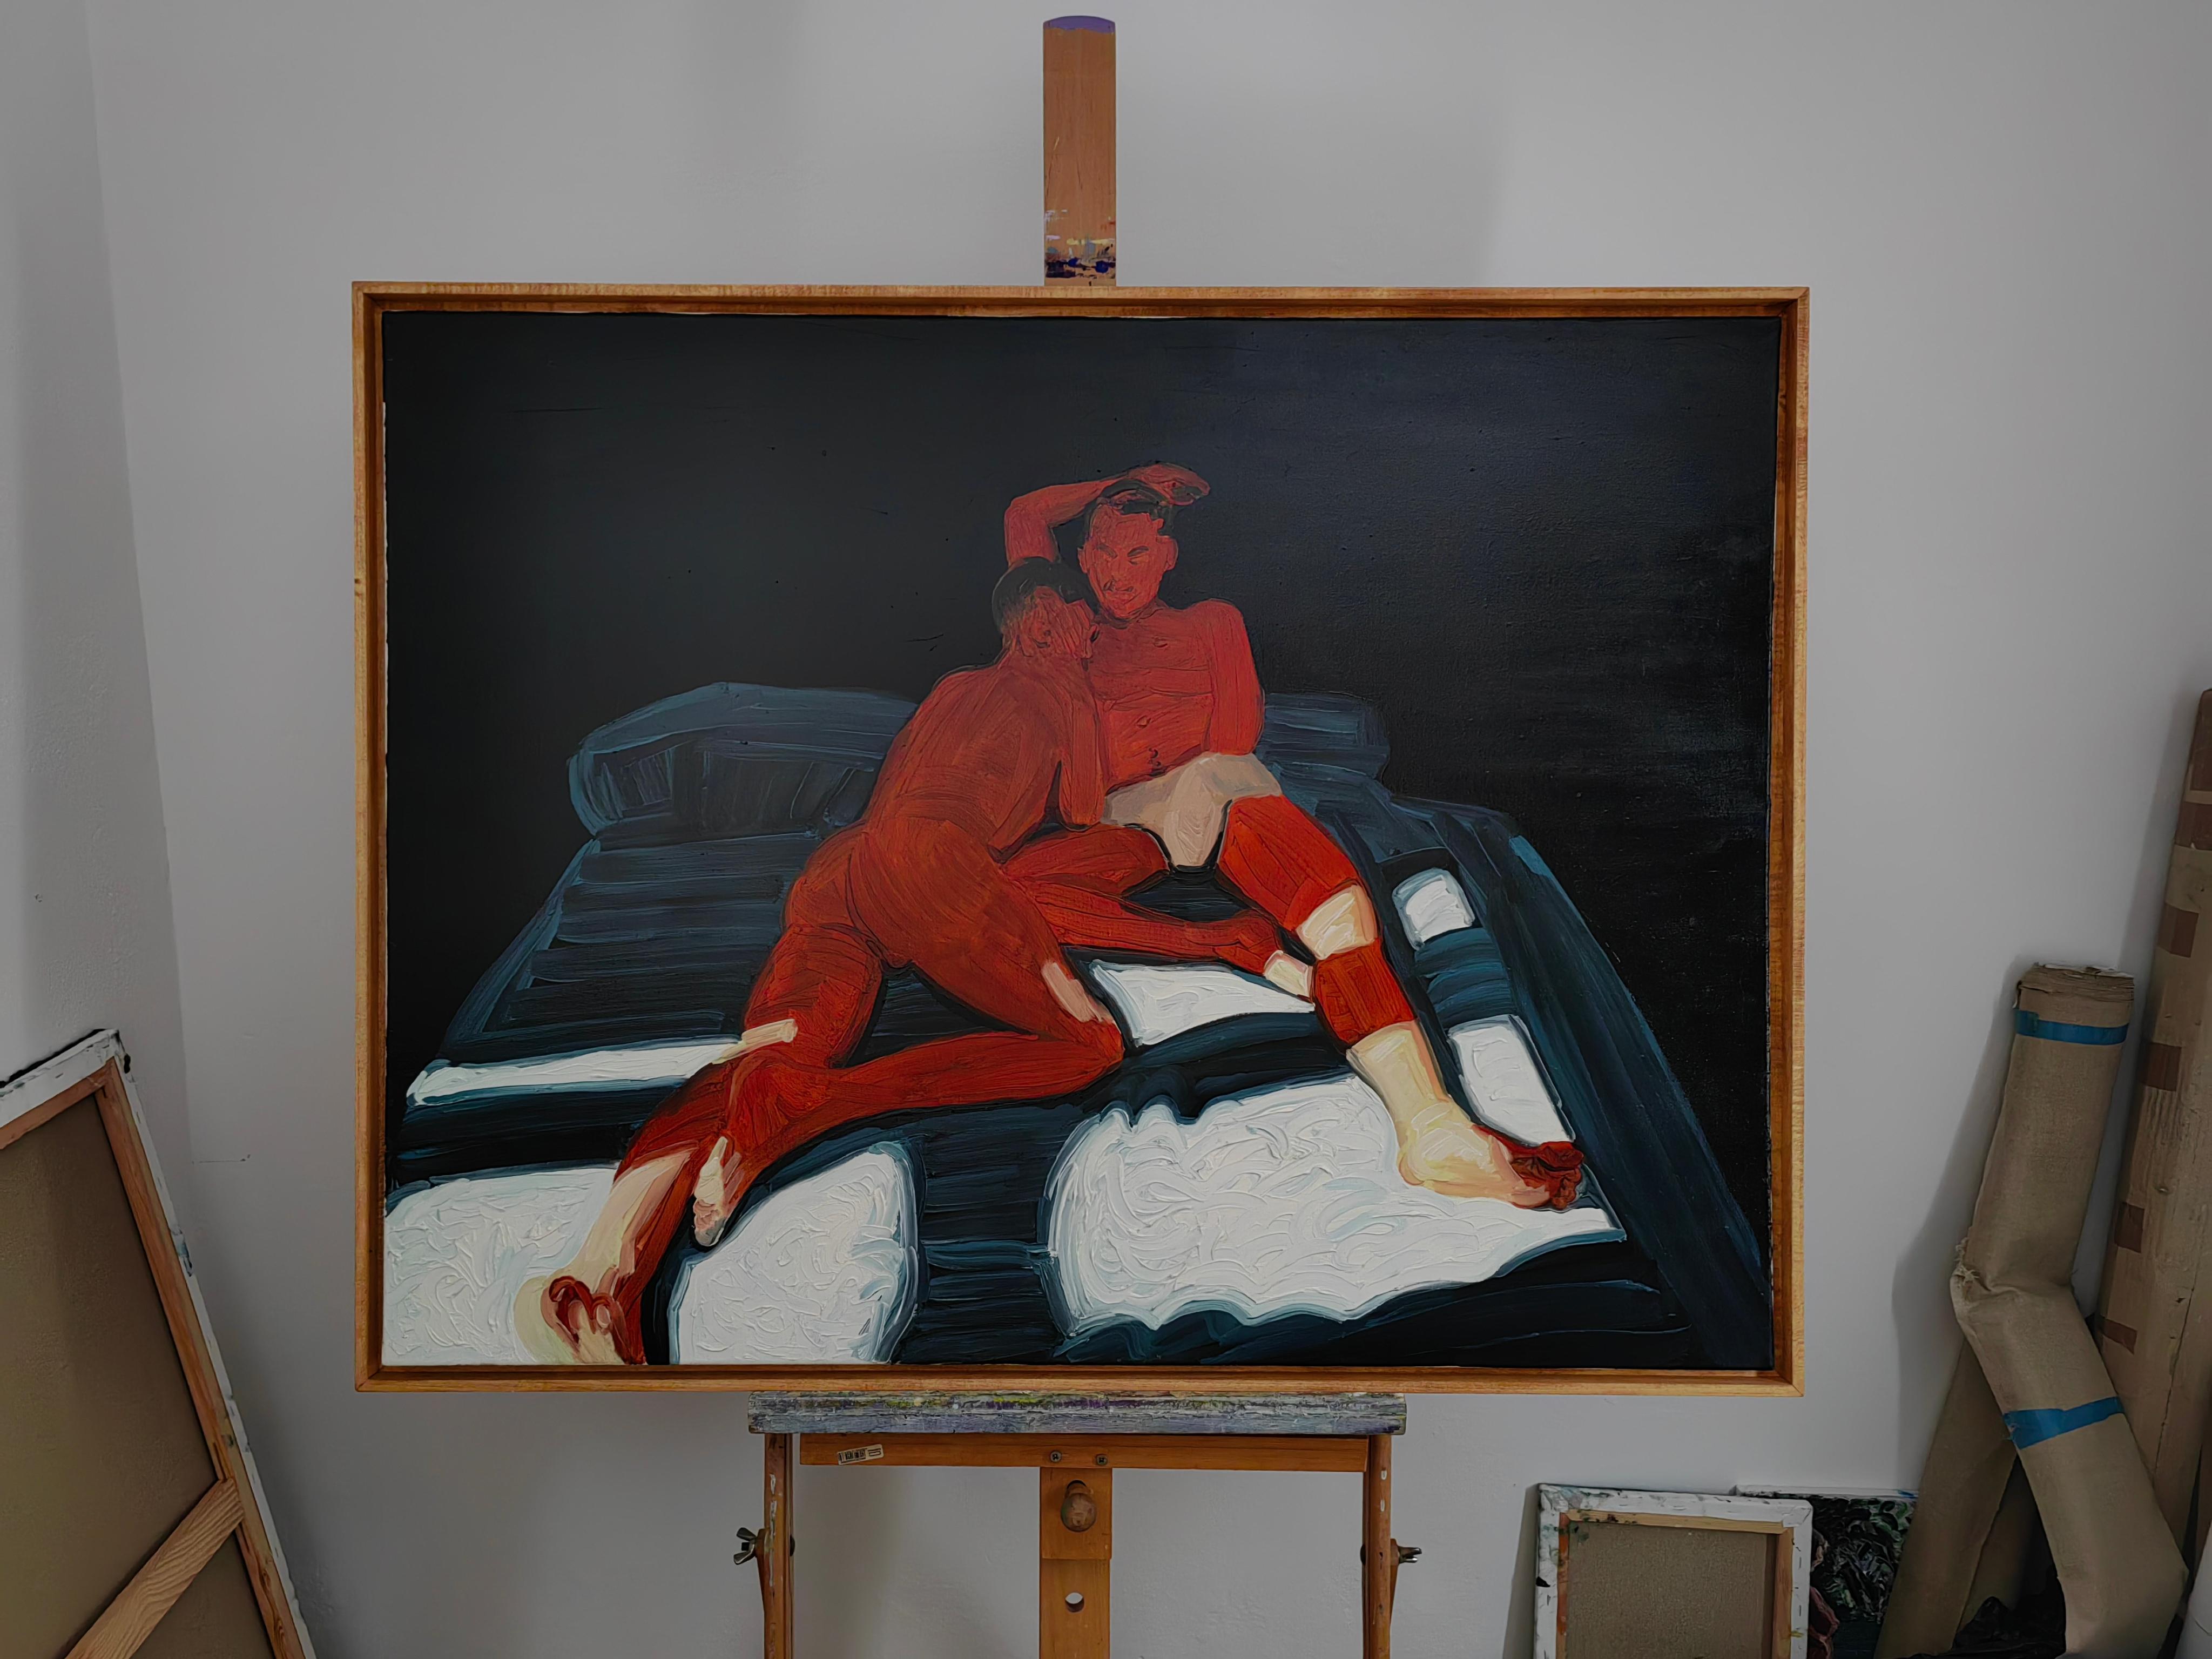 HEAT - Peinture à l'huile contemporaine expressive et figurative, série Nu masculin - Contemporain Painting par Bartosz Kolata